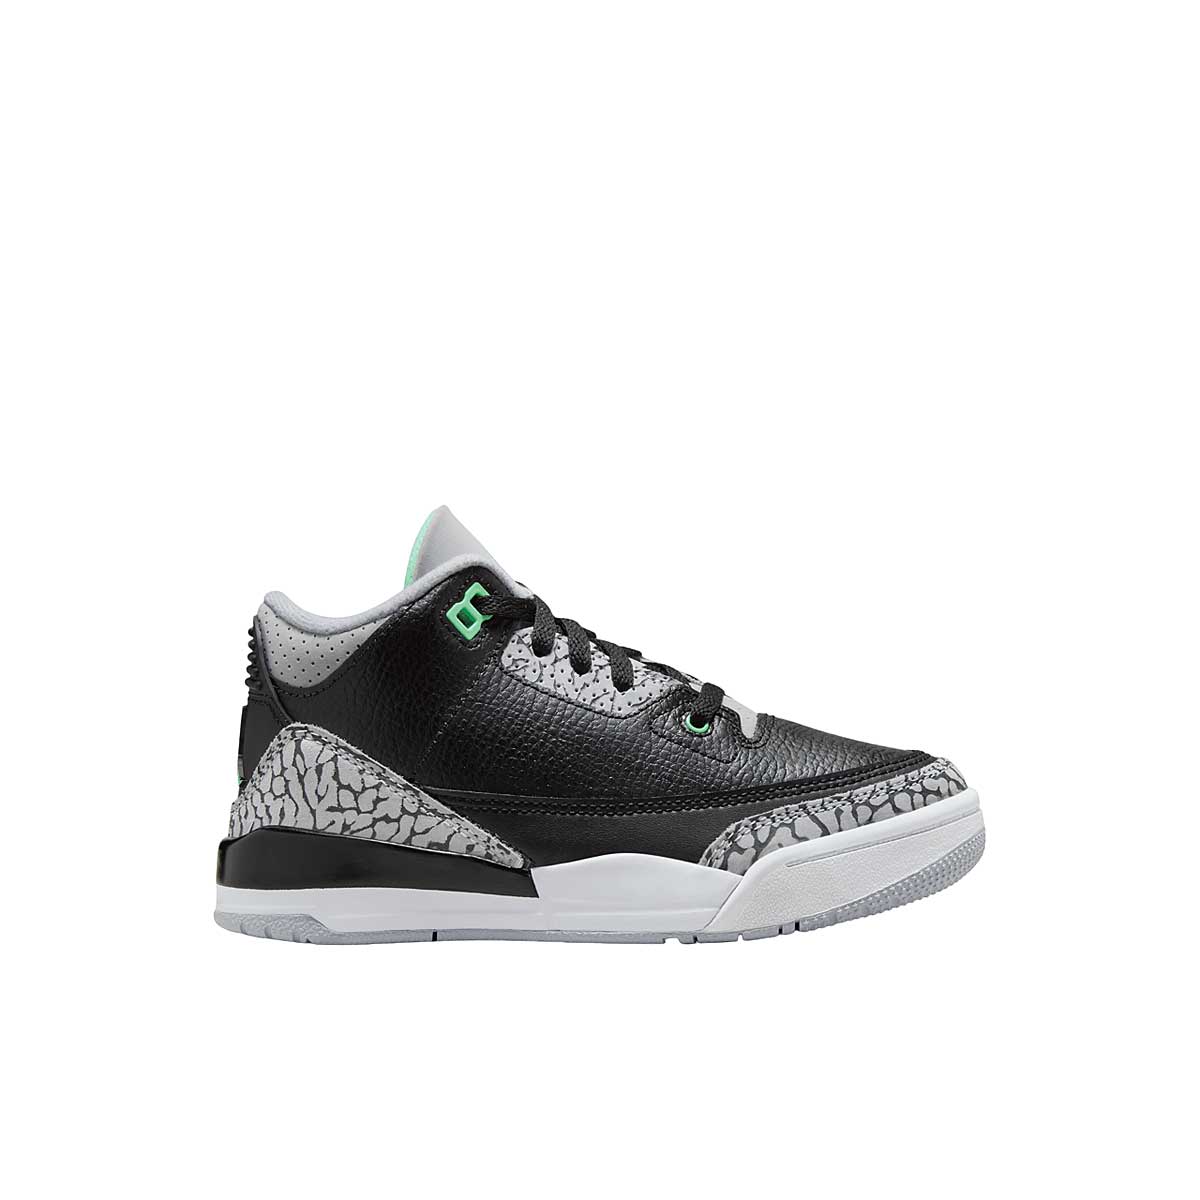 Jordan Jordan 3 Retro Green Glow Ps, Black/green Glow-wolf Grey-white EU33,5